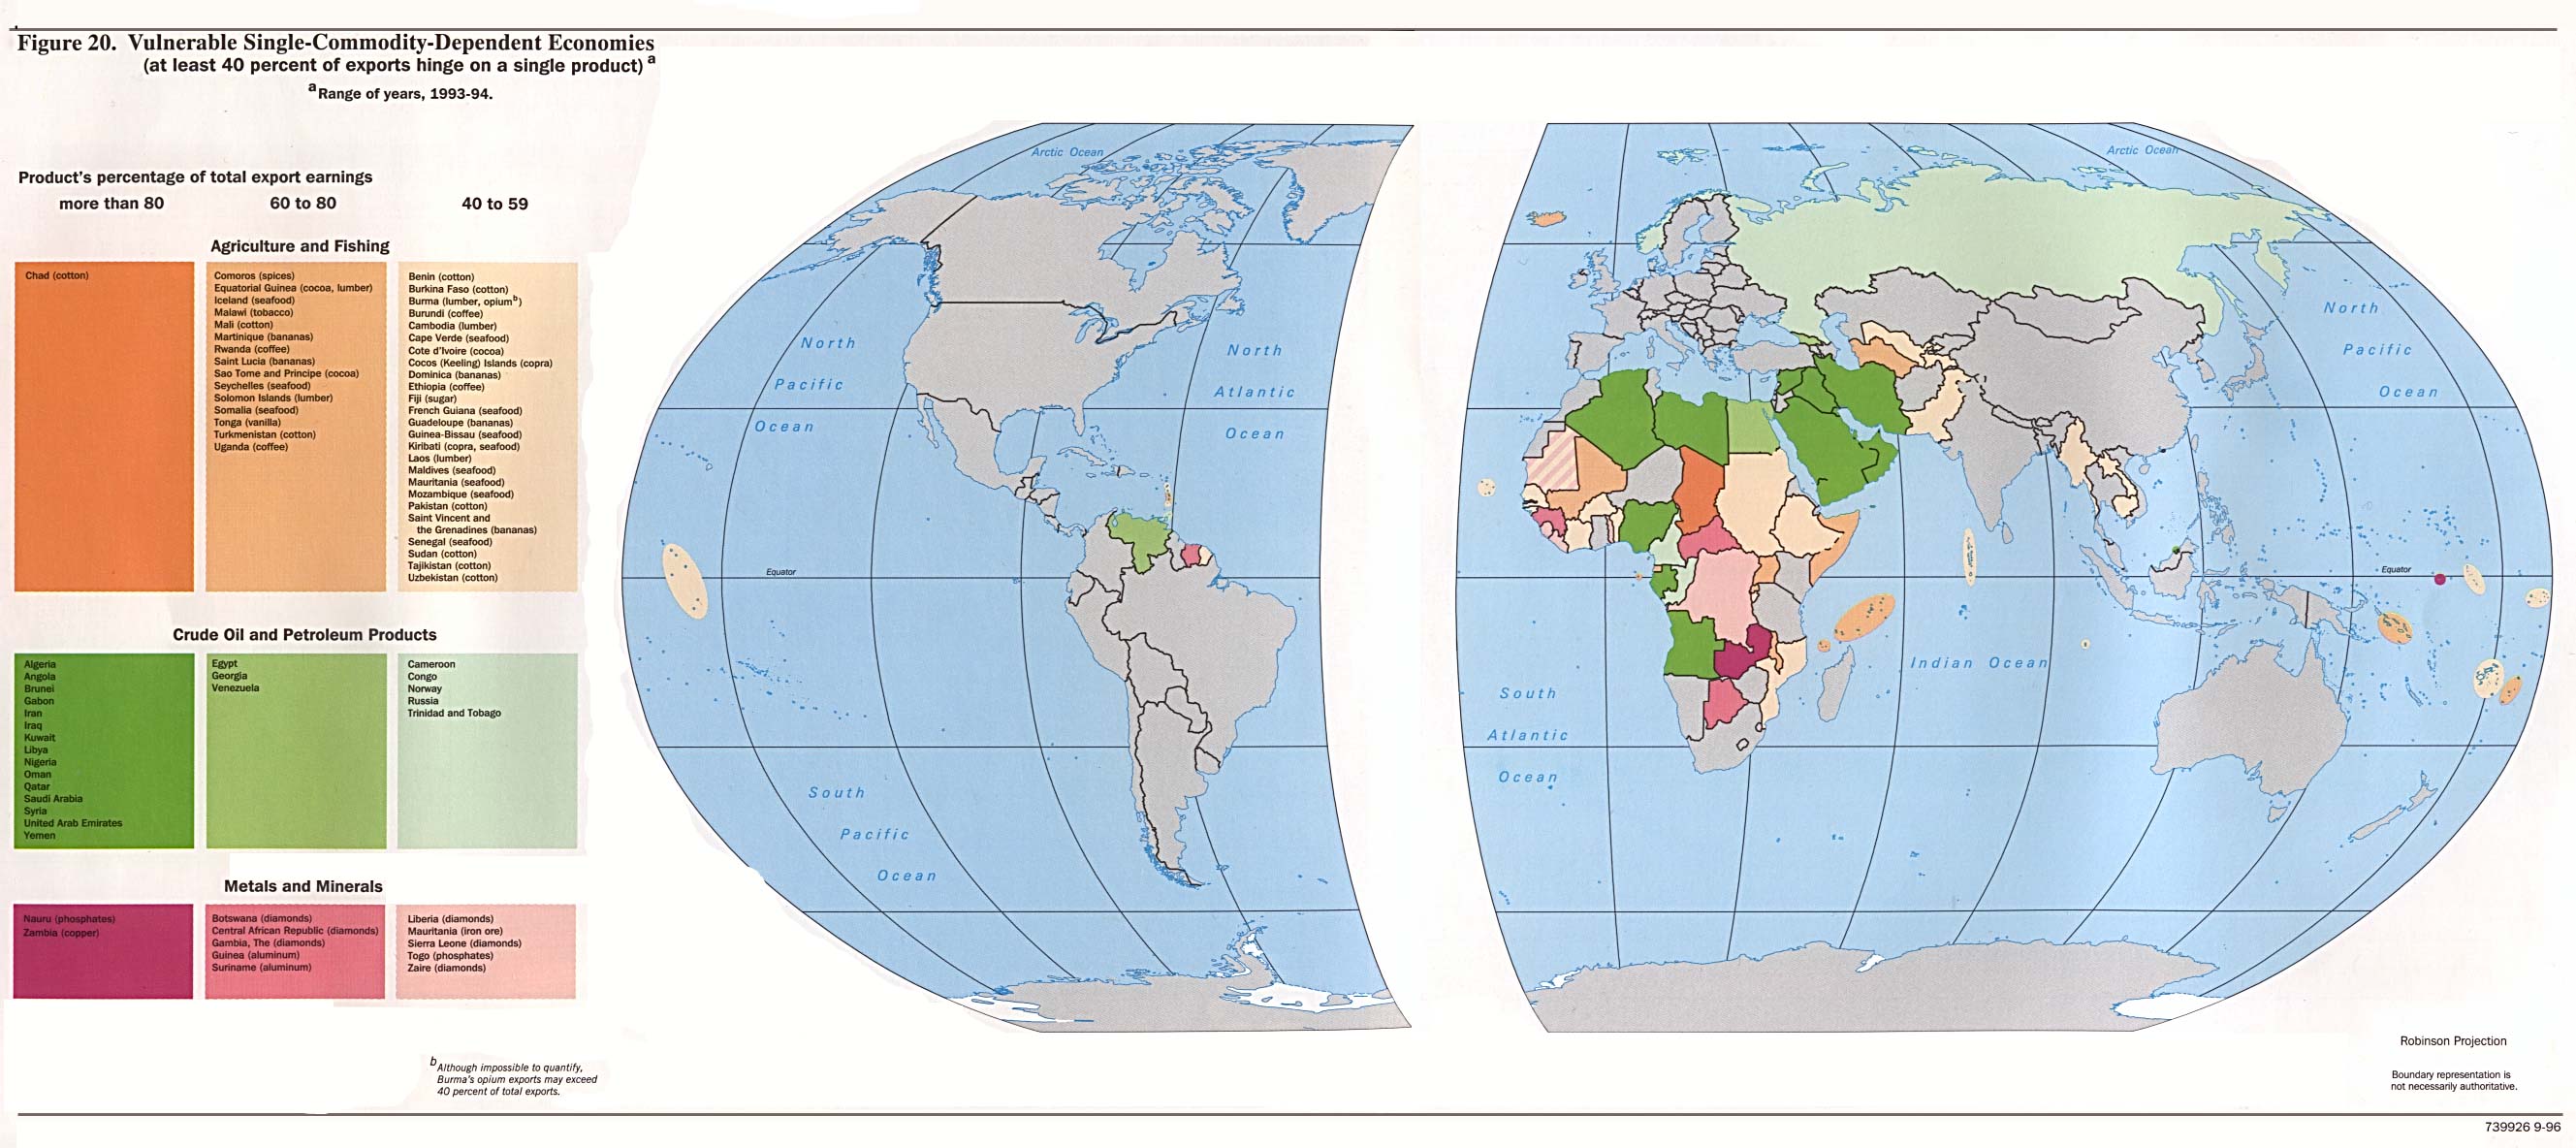 Map Of The World. Vulnerable Single-Commoditiy-Dependent Economies 1996 (390K) from Handbook of International Economic Statistics 